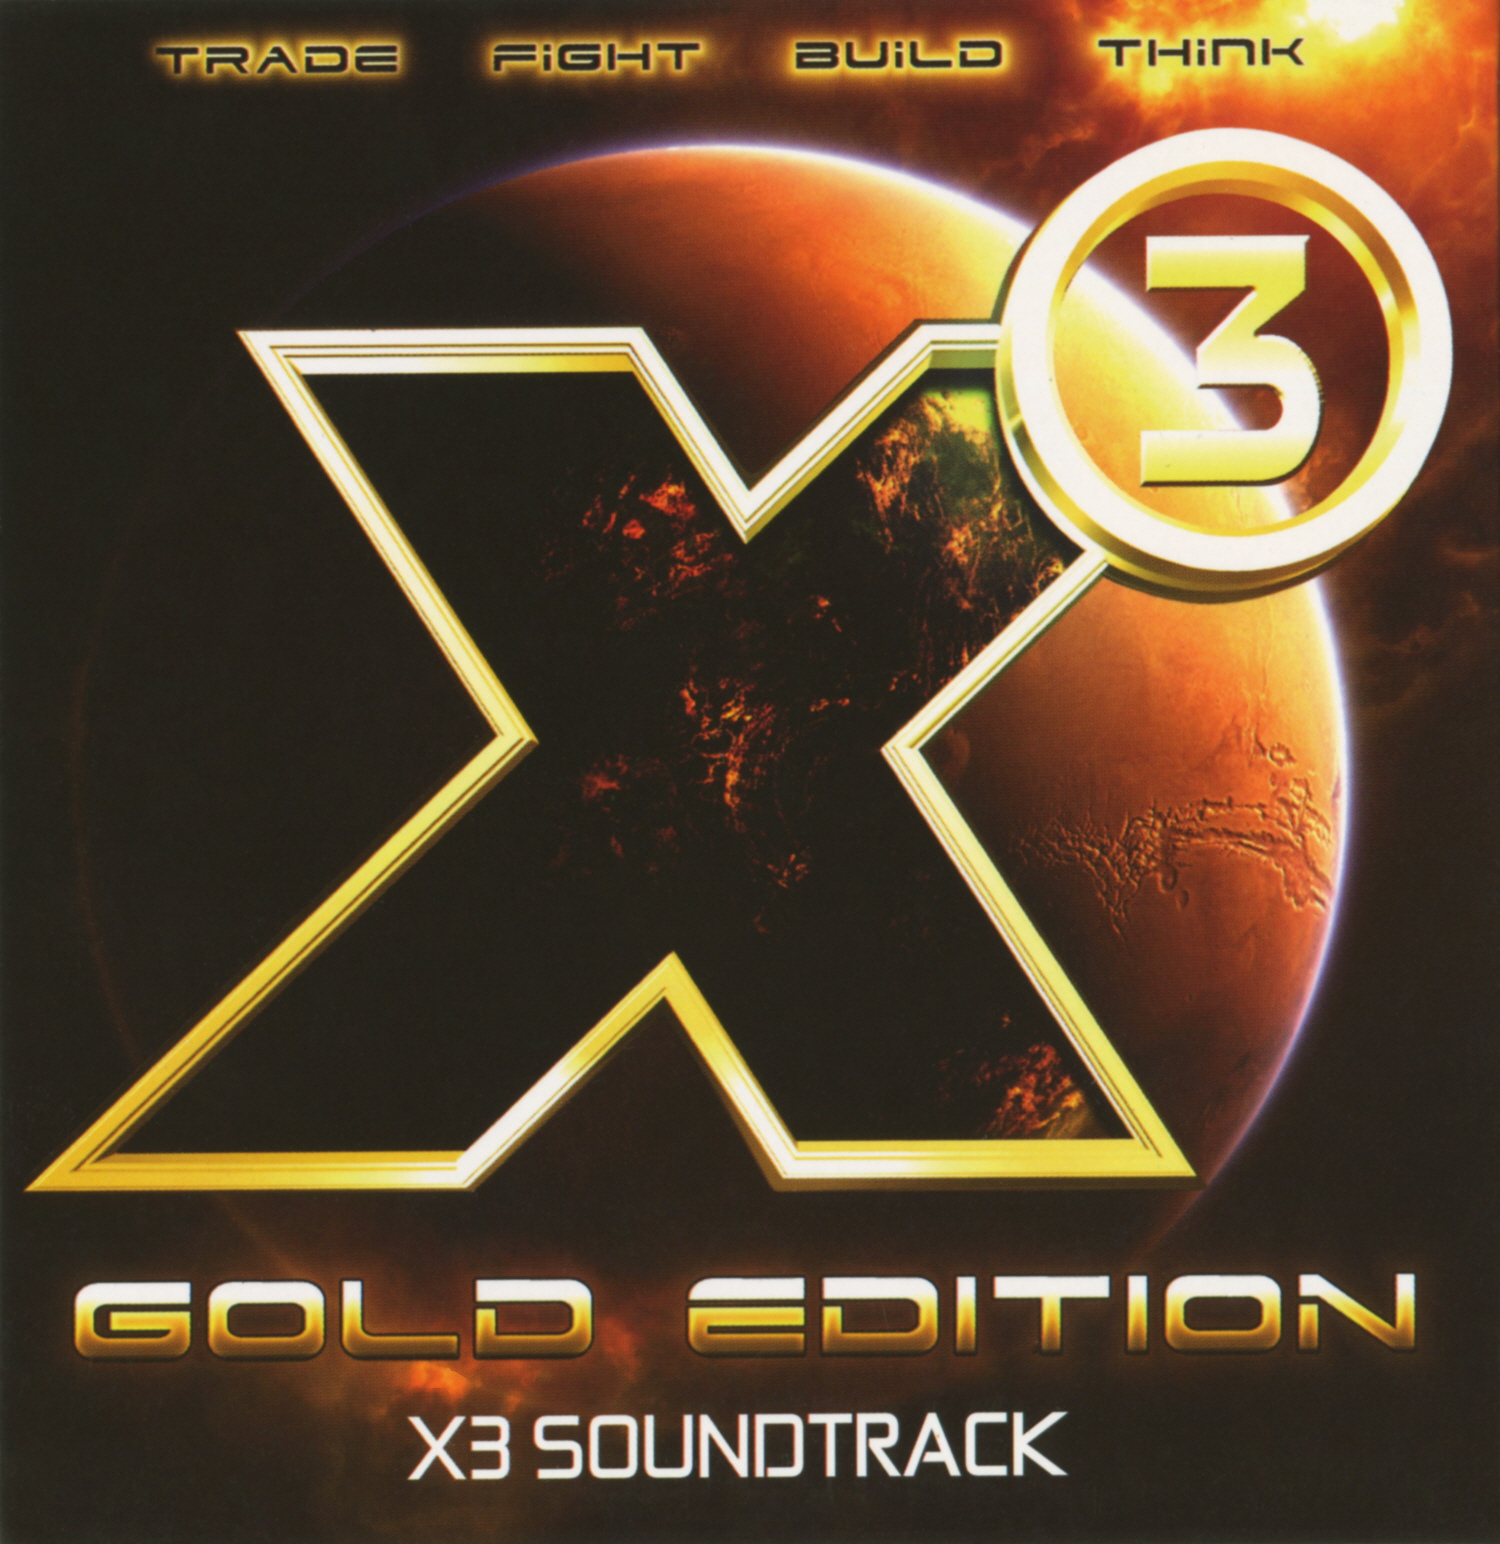 Gold mp3. X3 Gold Edition. Обложка релиза. ТВС 4 золотое издание. Трек Gold 2008.